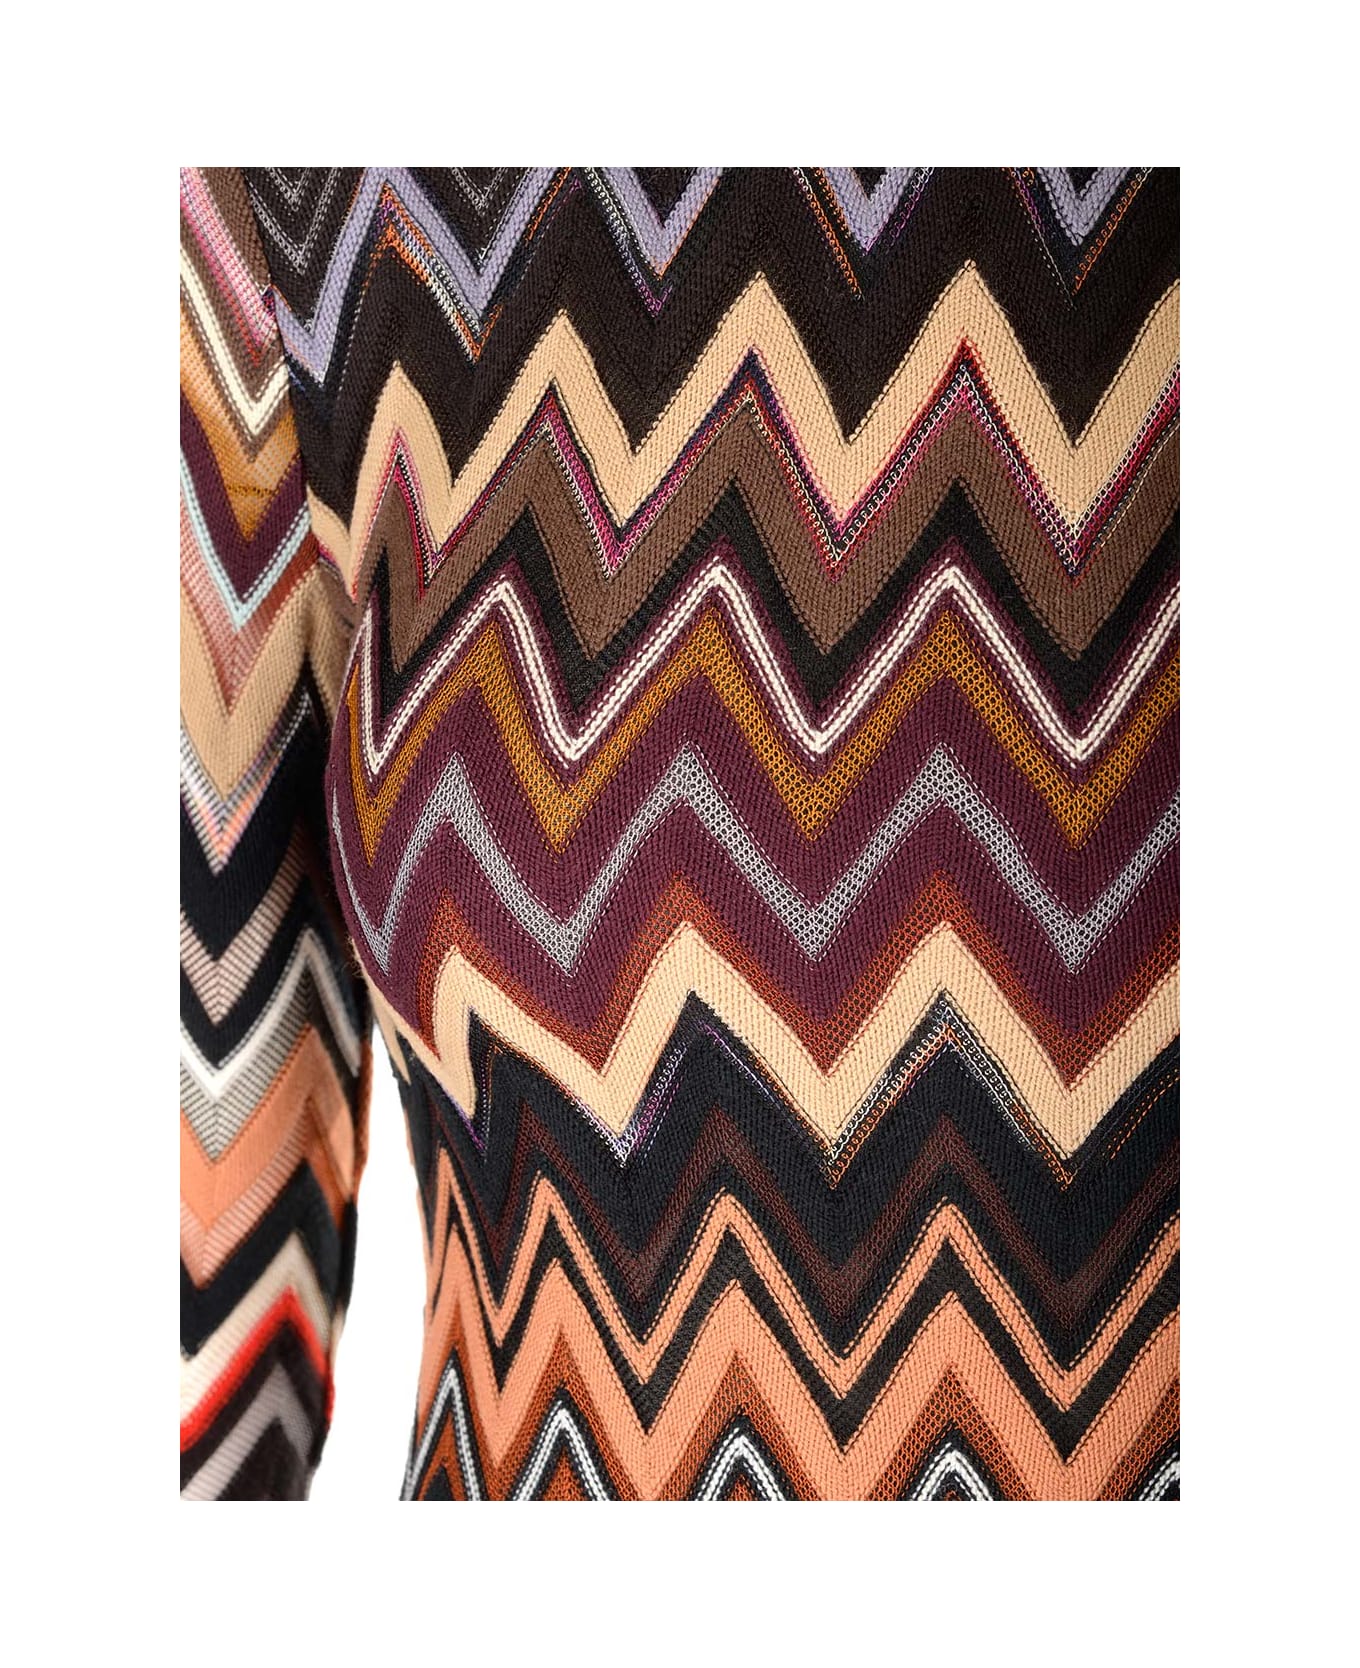 Missoni Wool Jersey Midi Dress - Multicolor